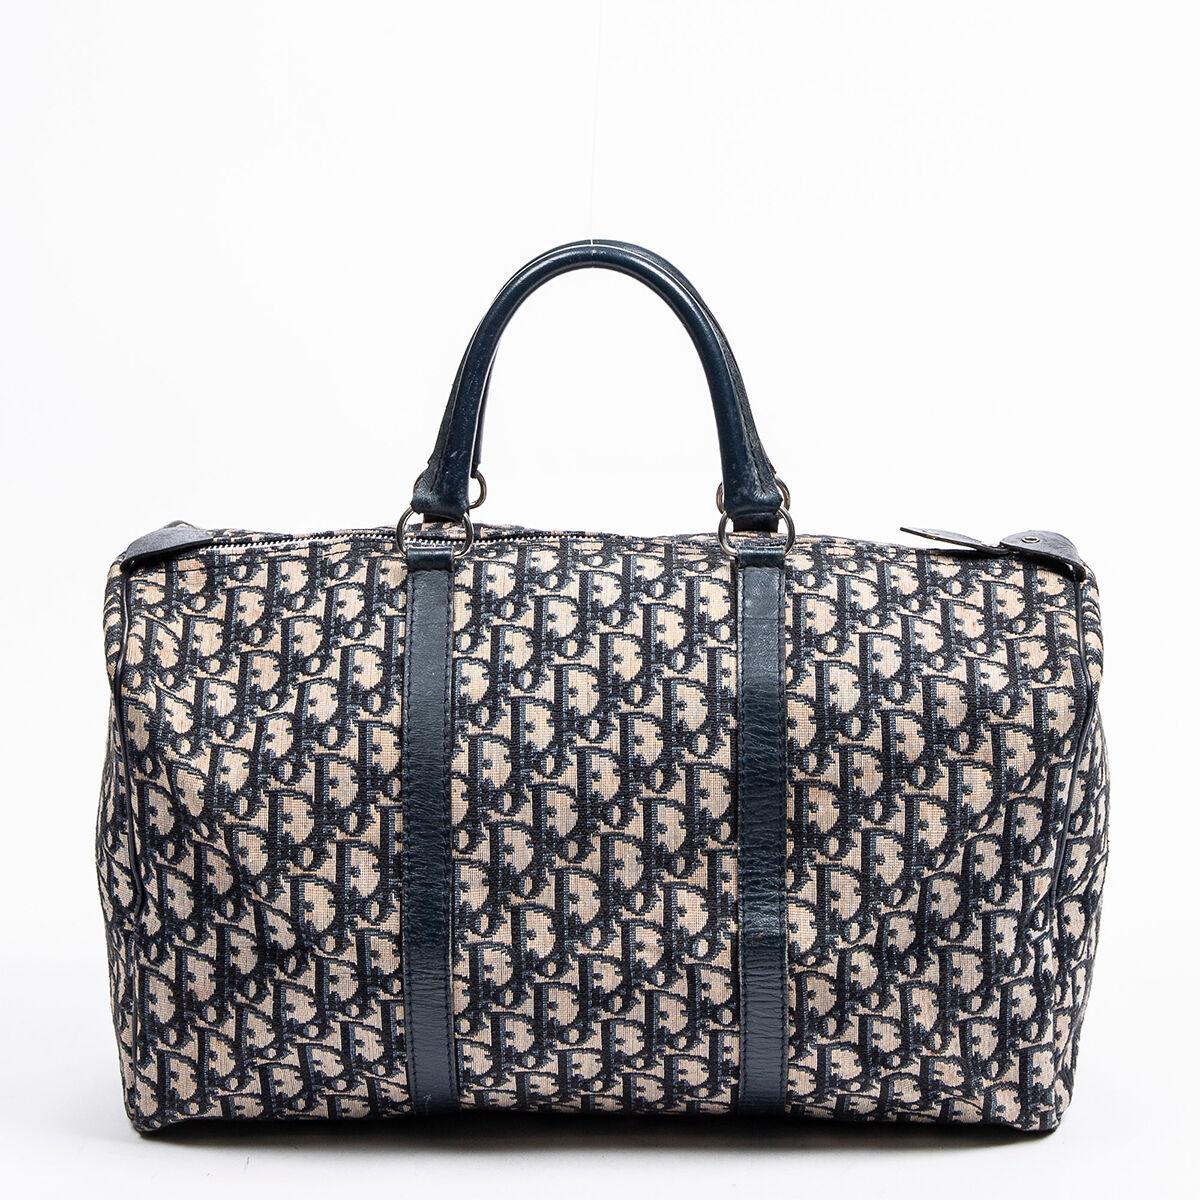 Sold at Auction: Dior Vintage Mini Boston handbag